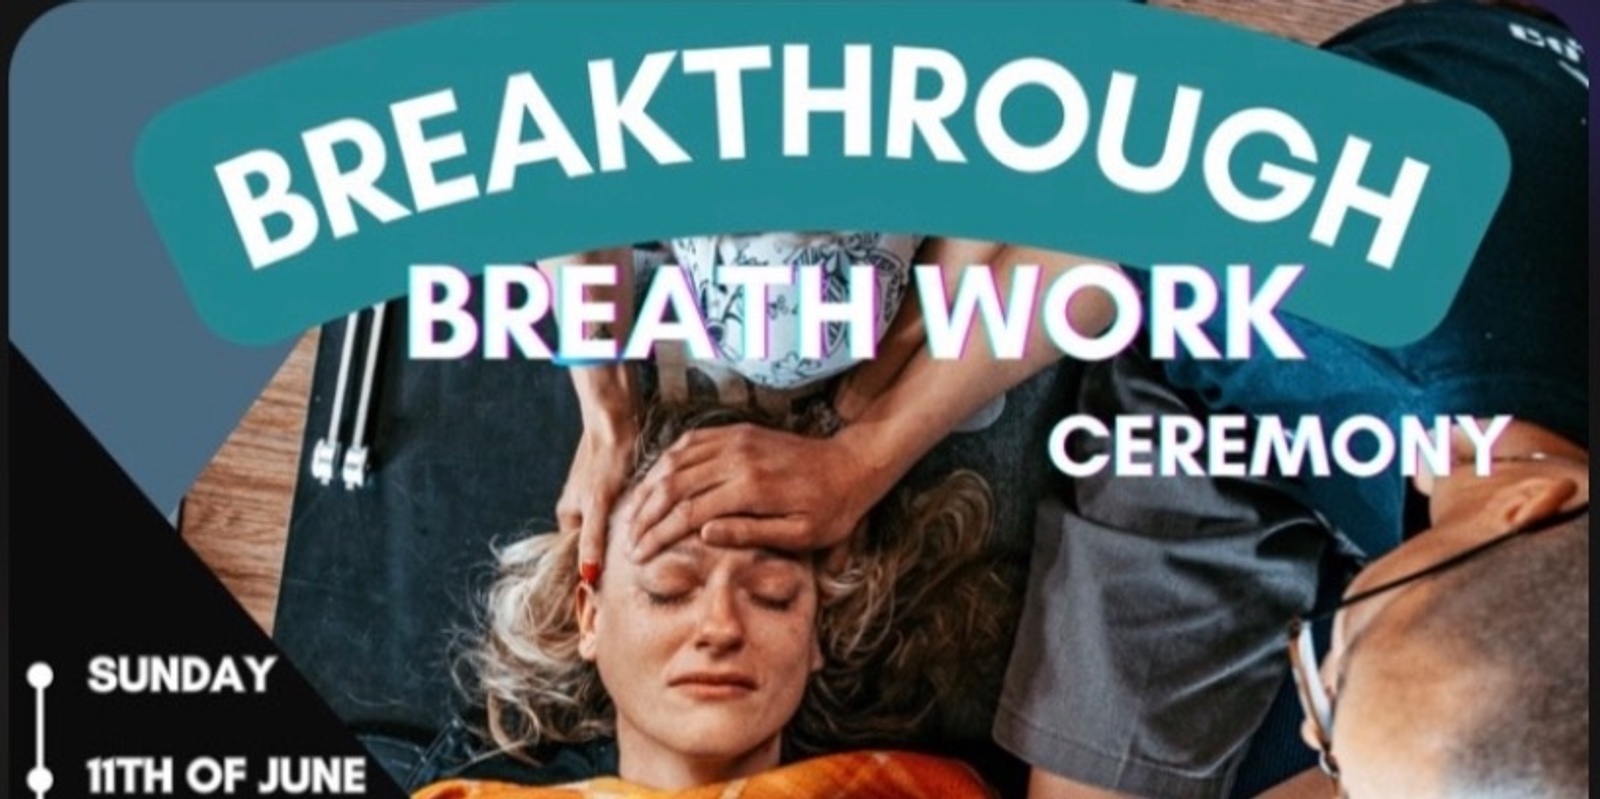 Banner image for Breakthrough Breath Work